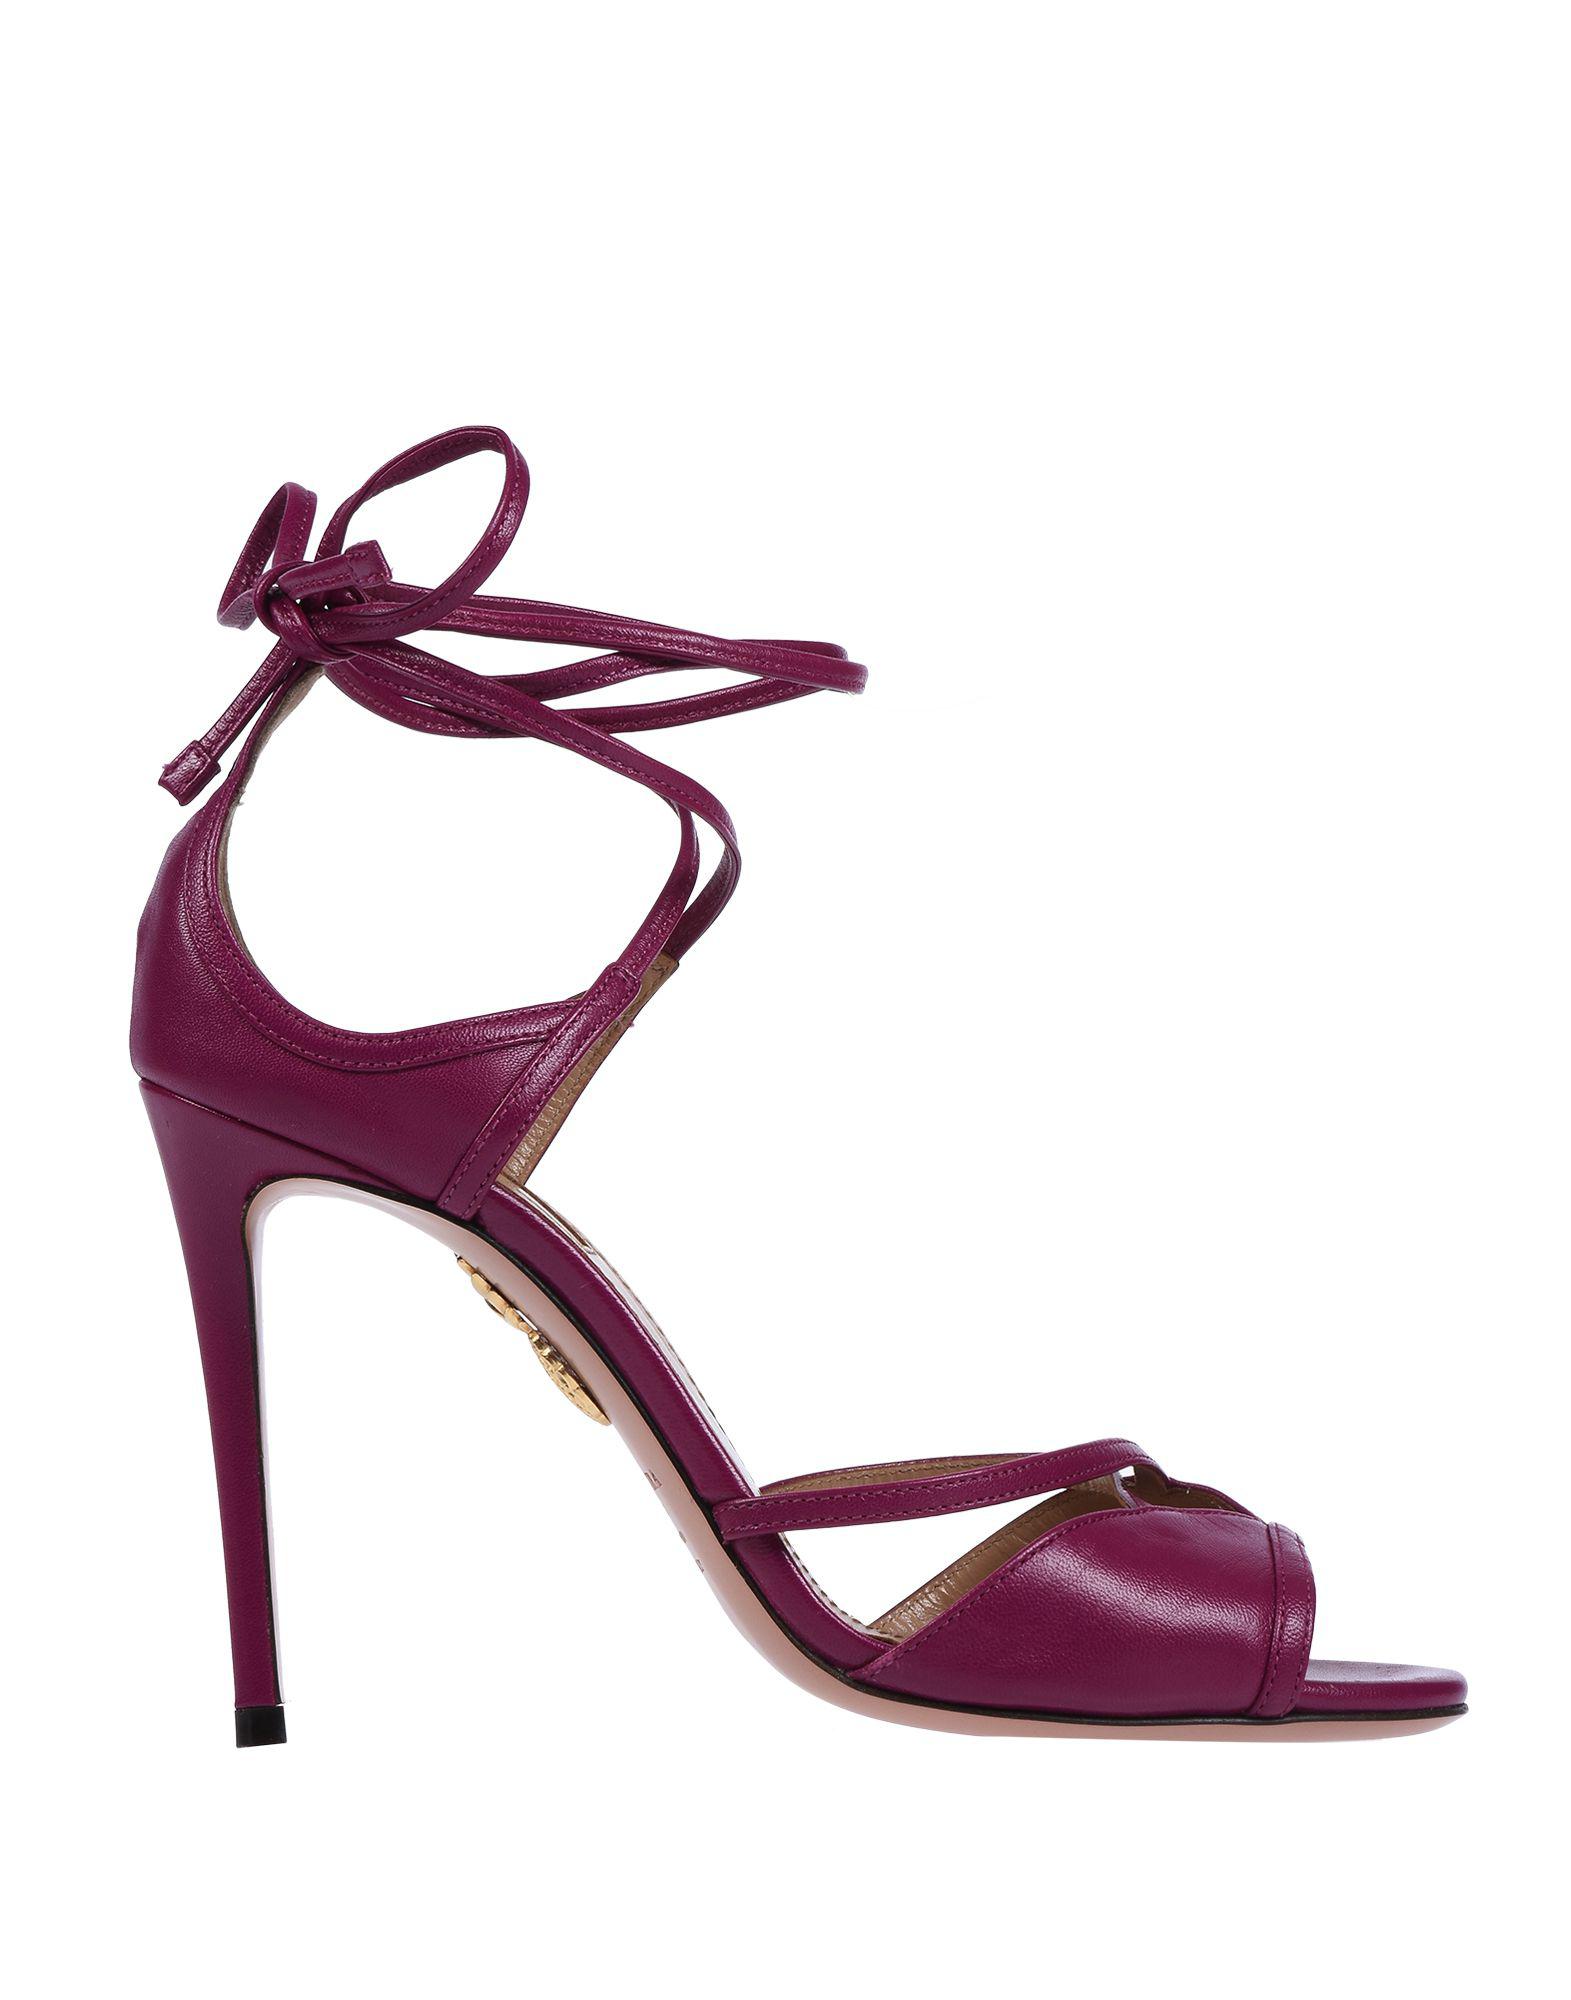 Aquazzura Leather Sandals in Purple - Lyst